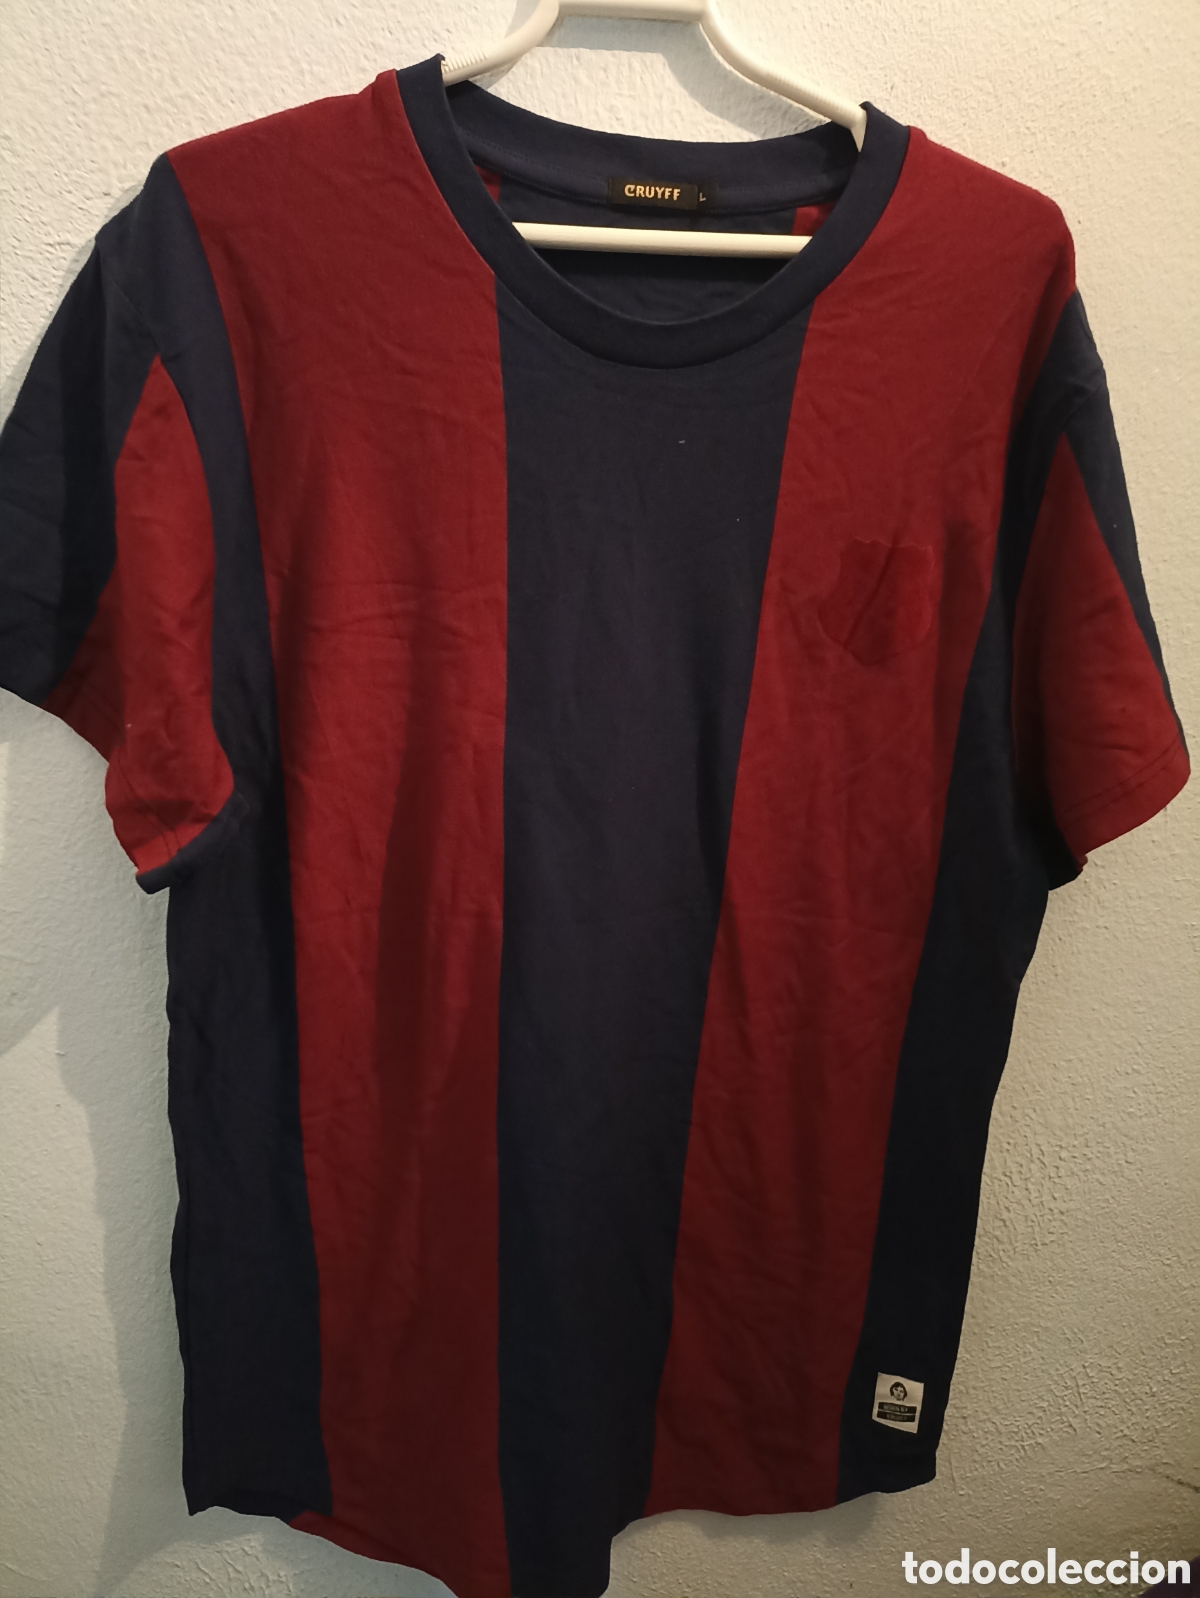 real sociedad l 1980 camiseta futbol football s - Buy Football T-Shirts on  todocoleccion